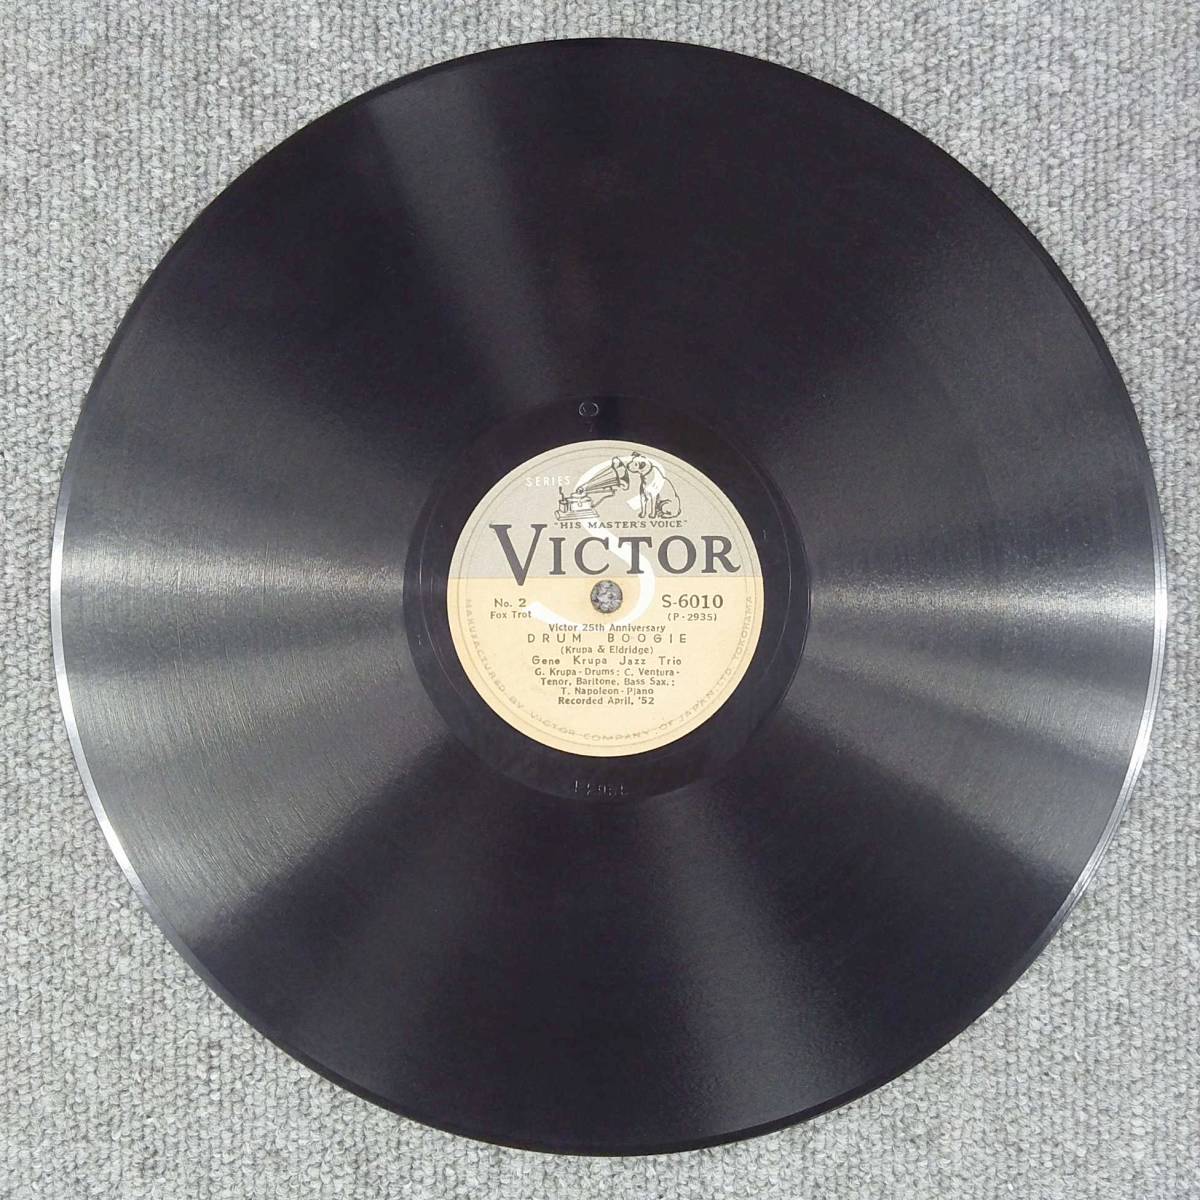 SP запись запись Gene Krupa Jazz Trio / DRUM BOOGIE / Jazz S-6010 Victor ny67